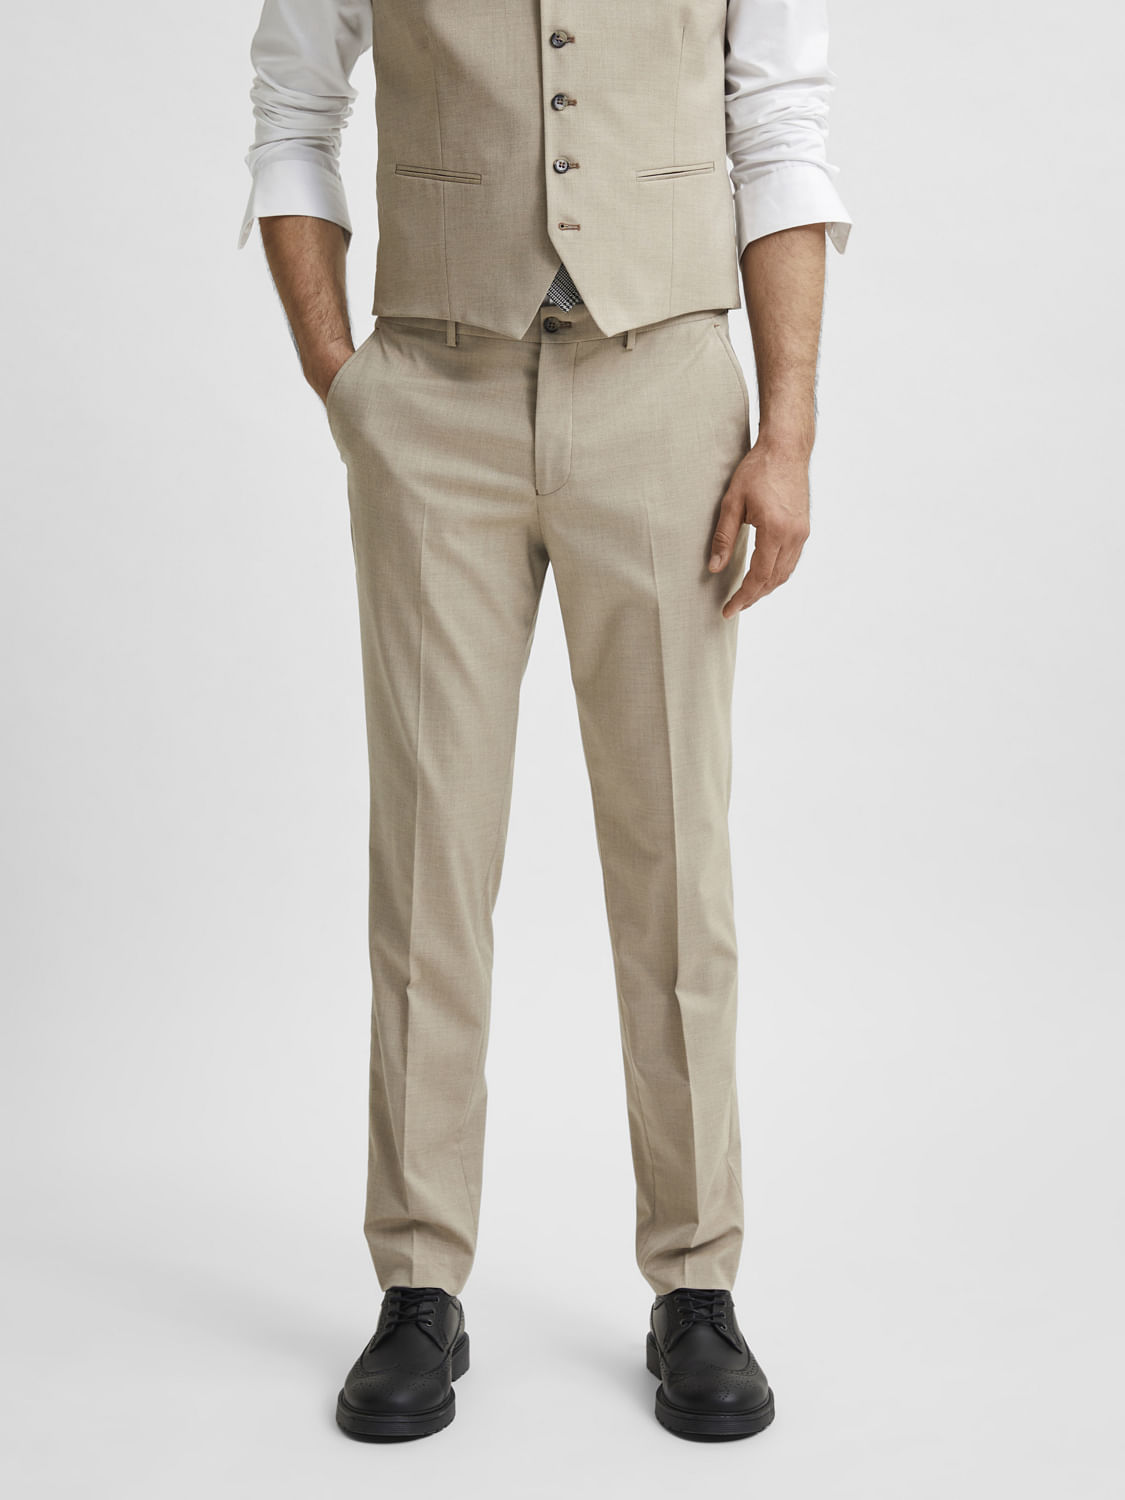 Buy HM Men Beige  Grey Suit Trousers Skinny Fit online  Looksgudin